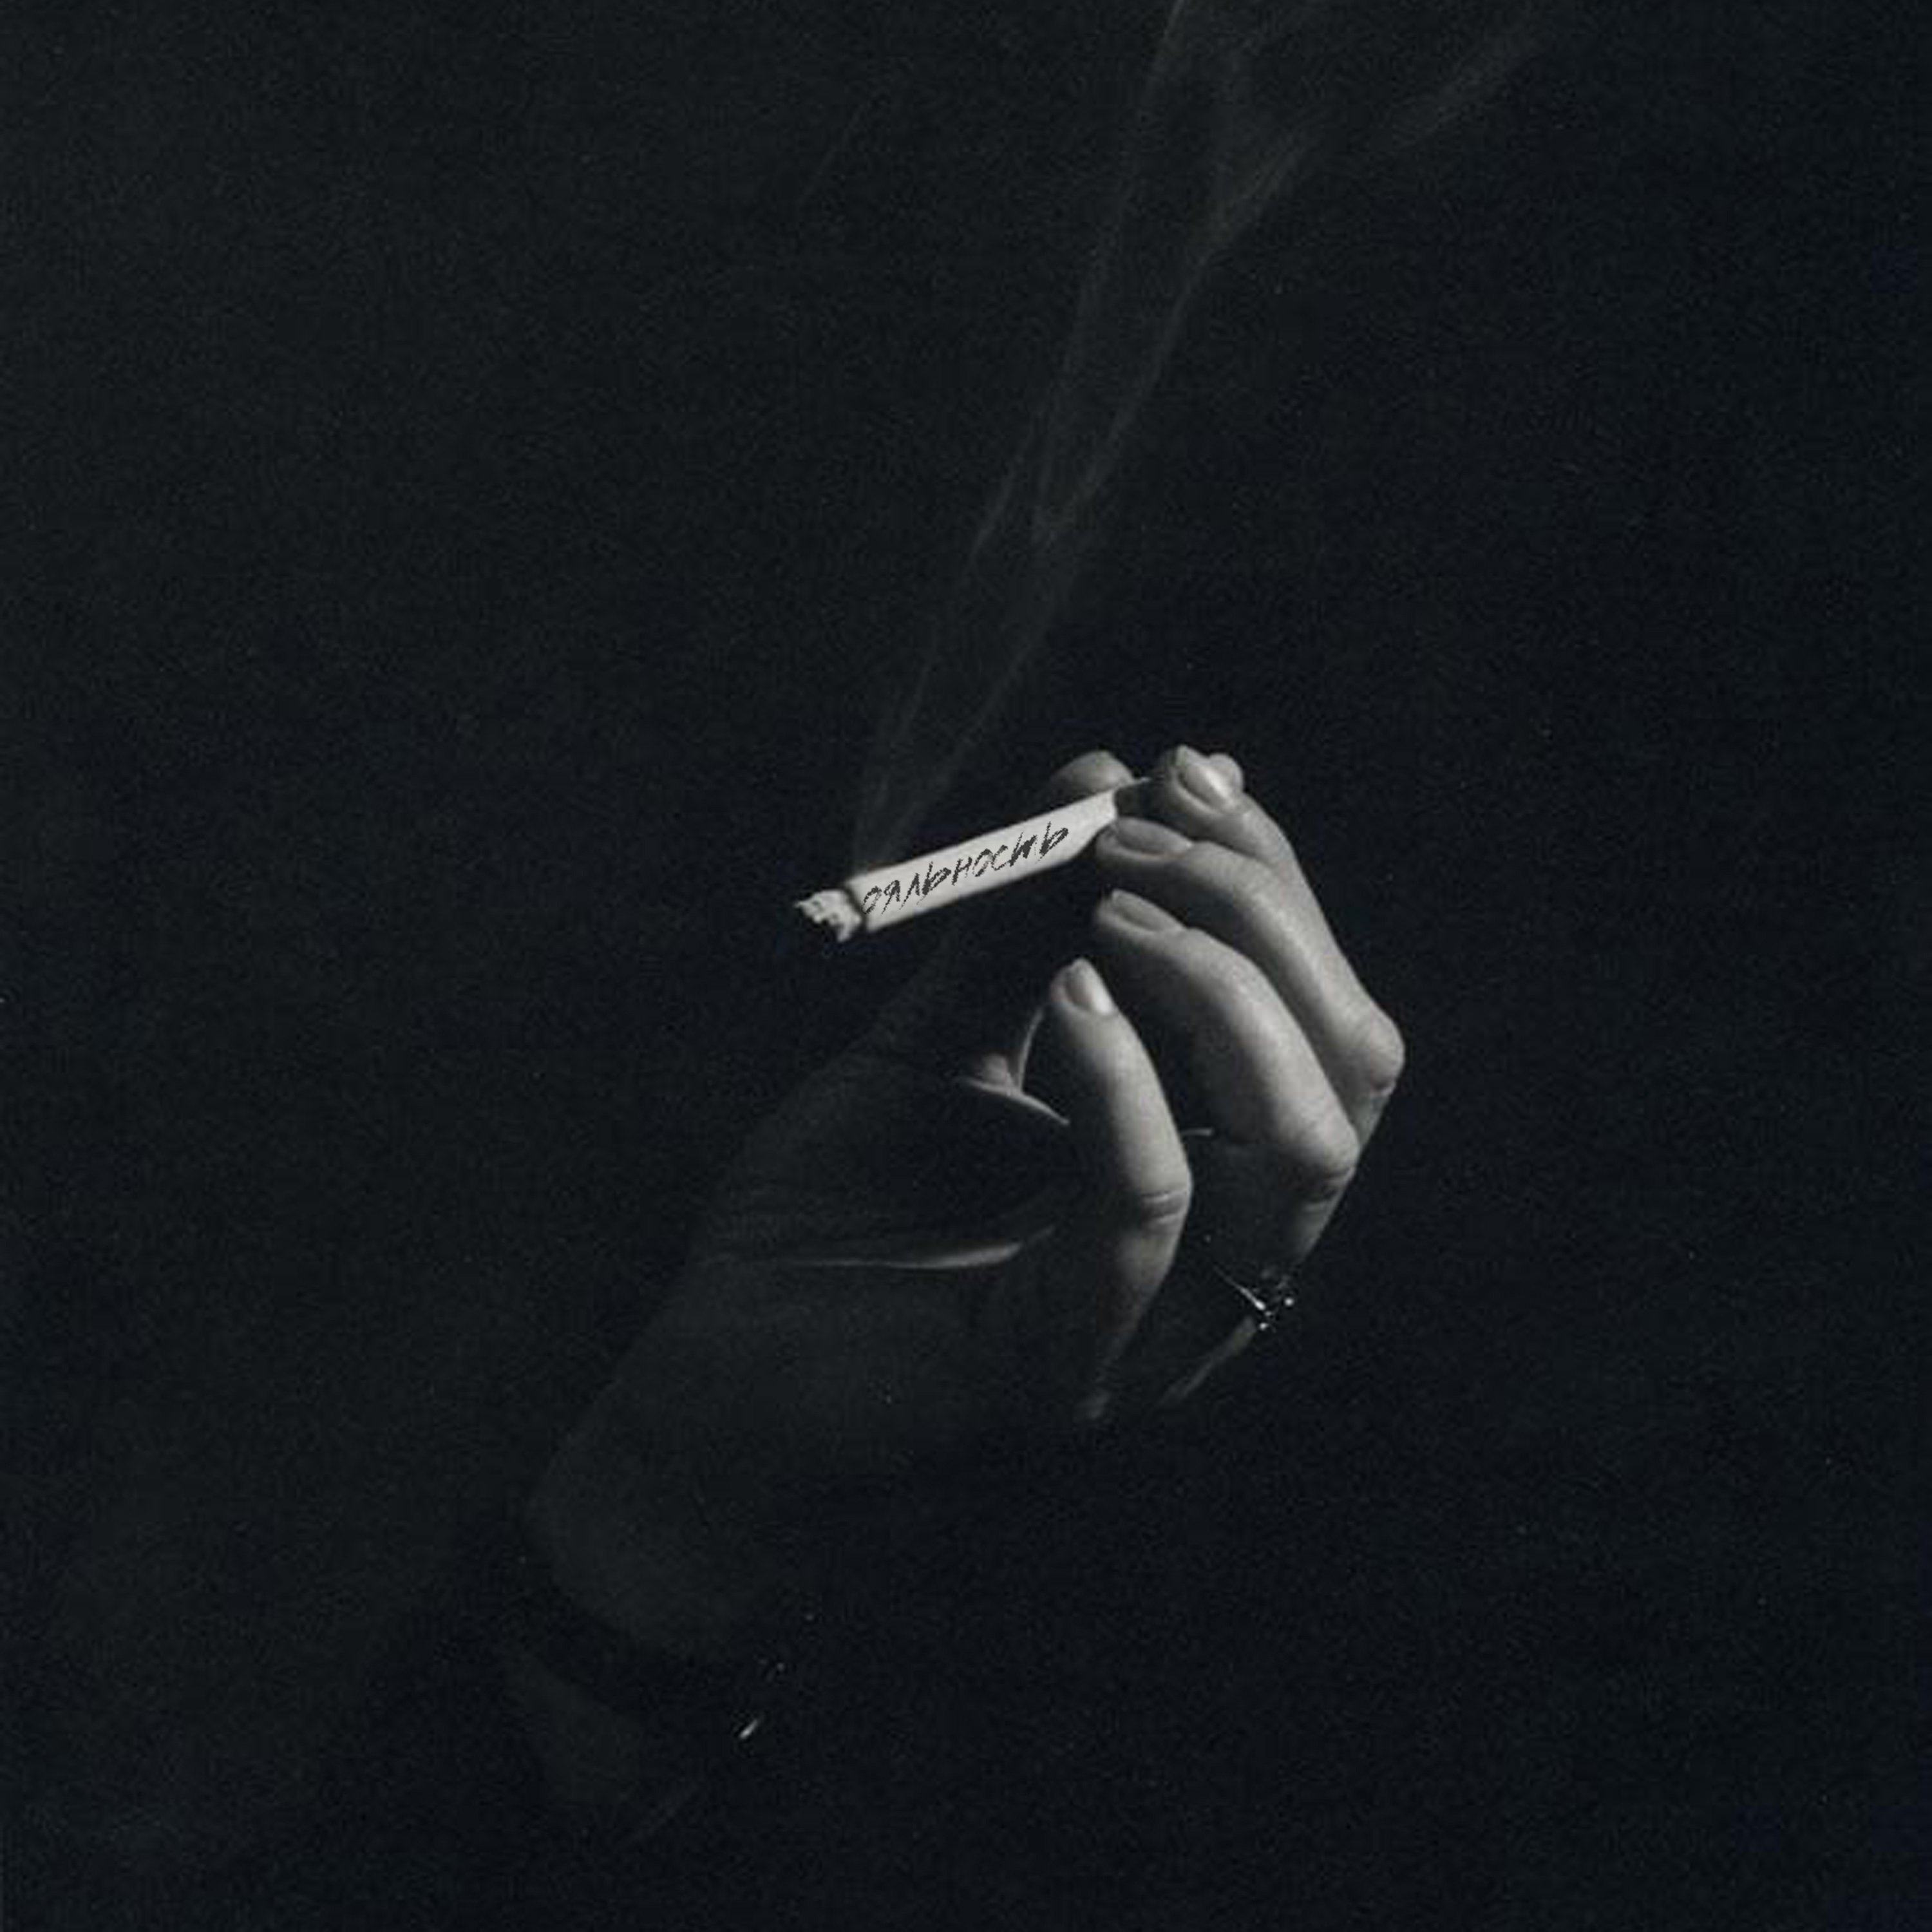 Аватарки курящие. Сигареты Эстетика. Мужская рука с сигаретой. Сигаретатв руке еа черном фоне. Курение Эстетика.